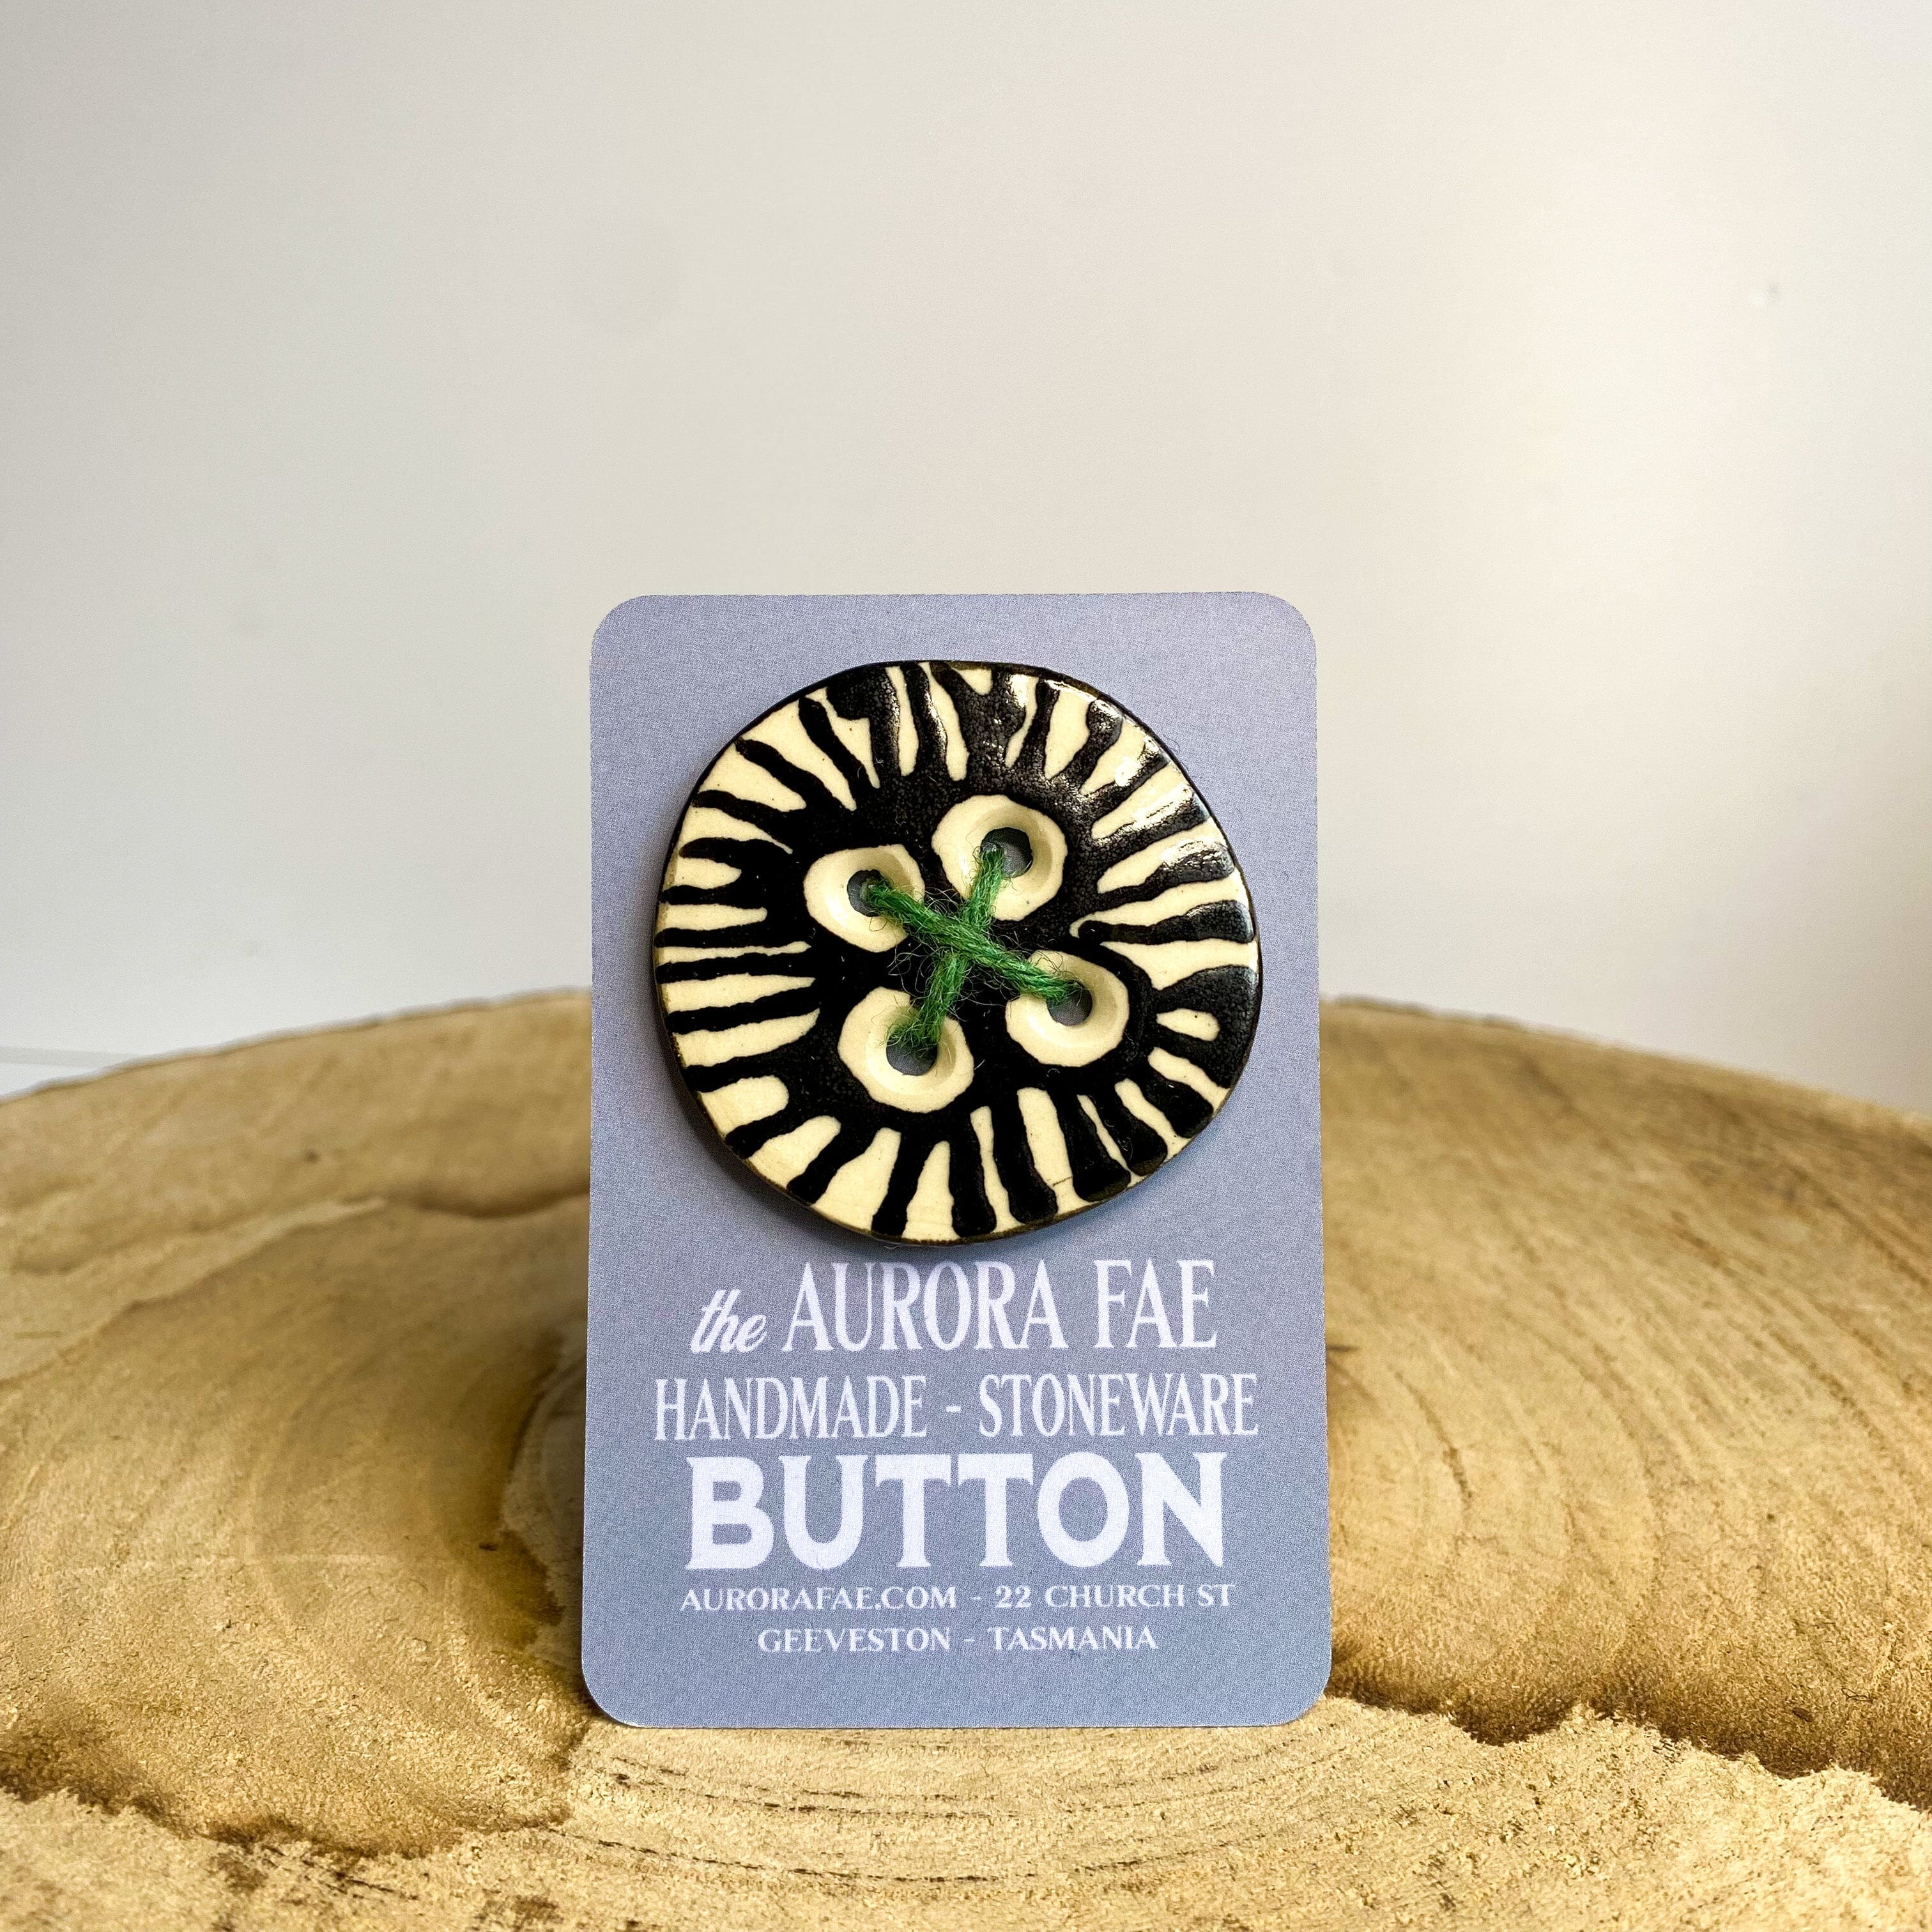 Ceramic Buttons - Aurora Fae Ceramic Buttons The Aurora Fae 